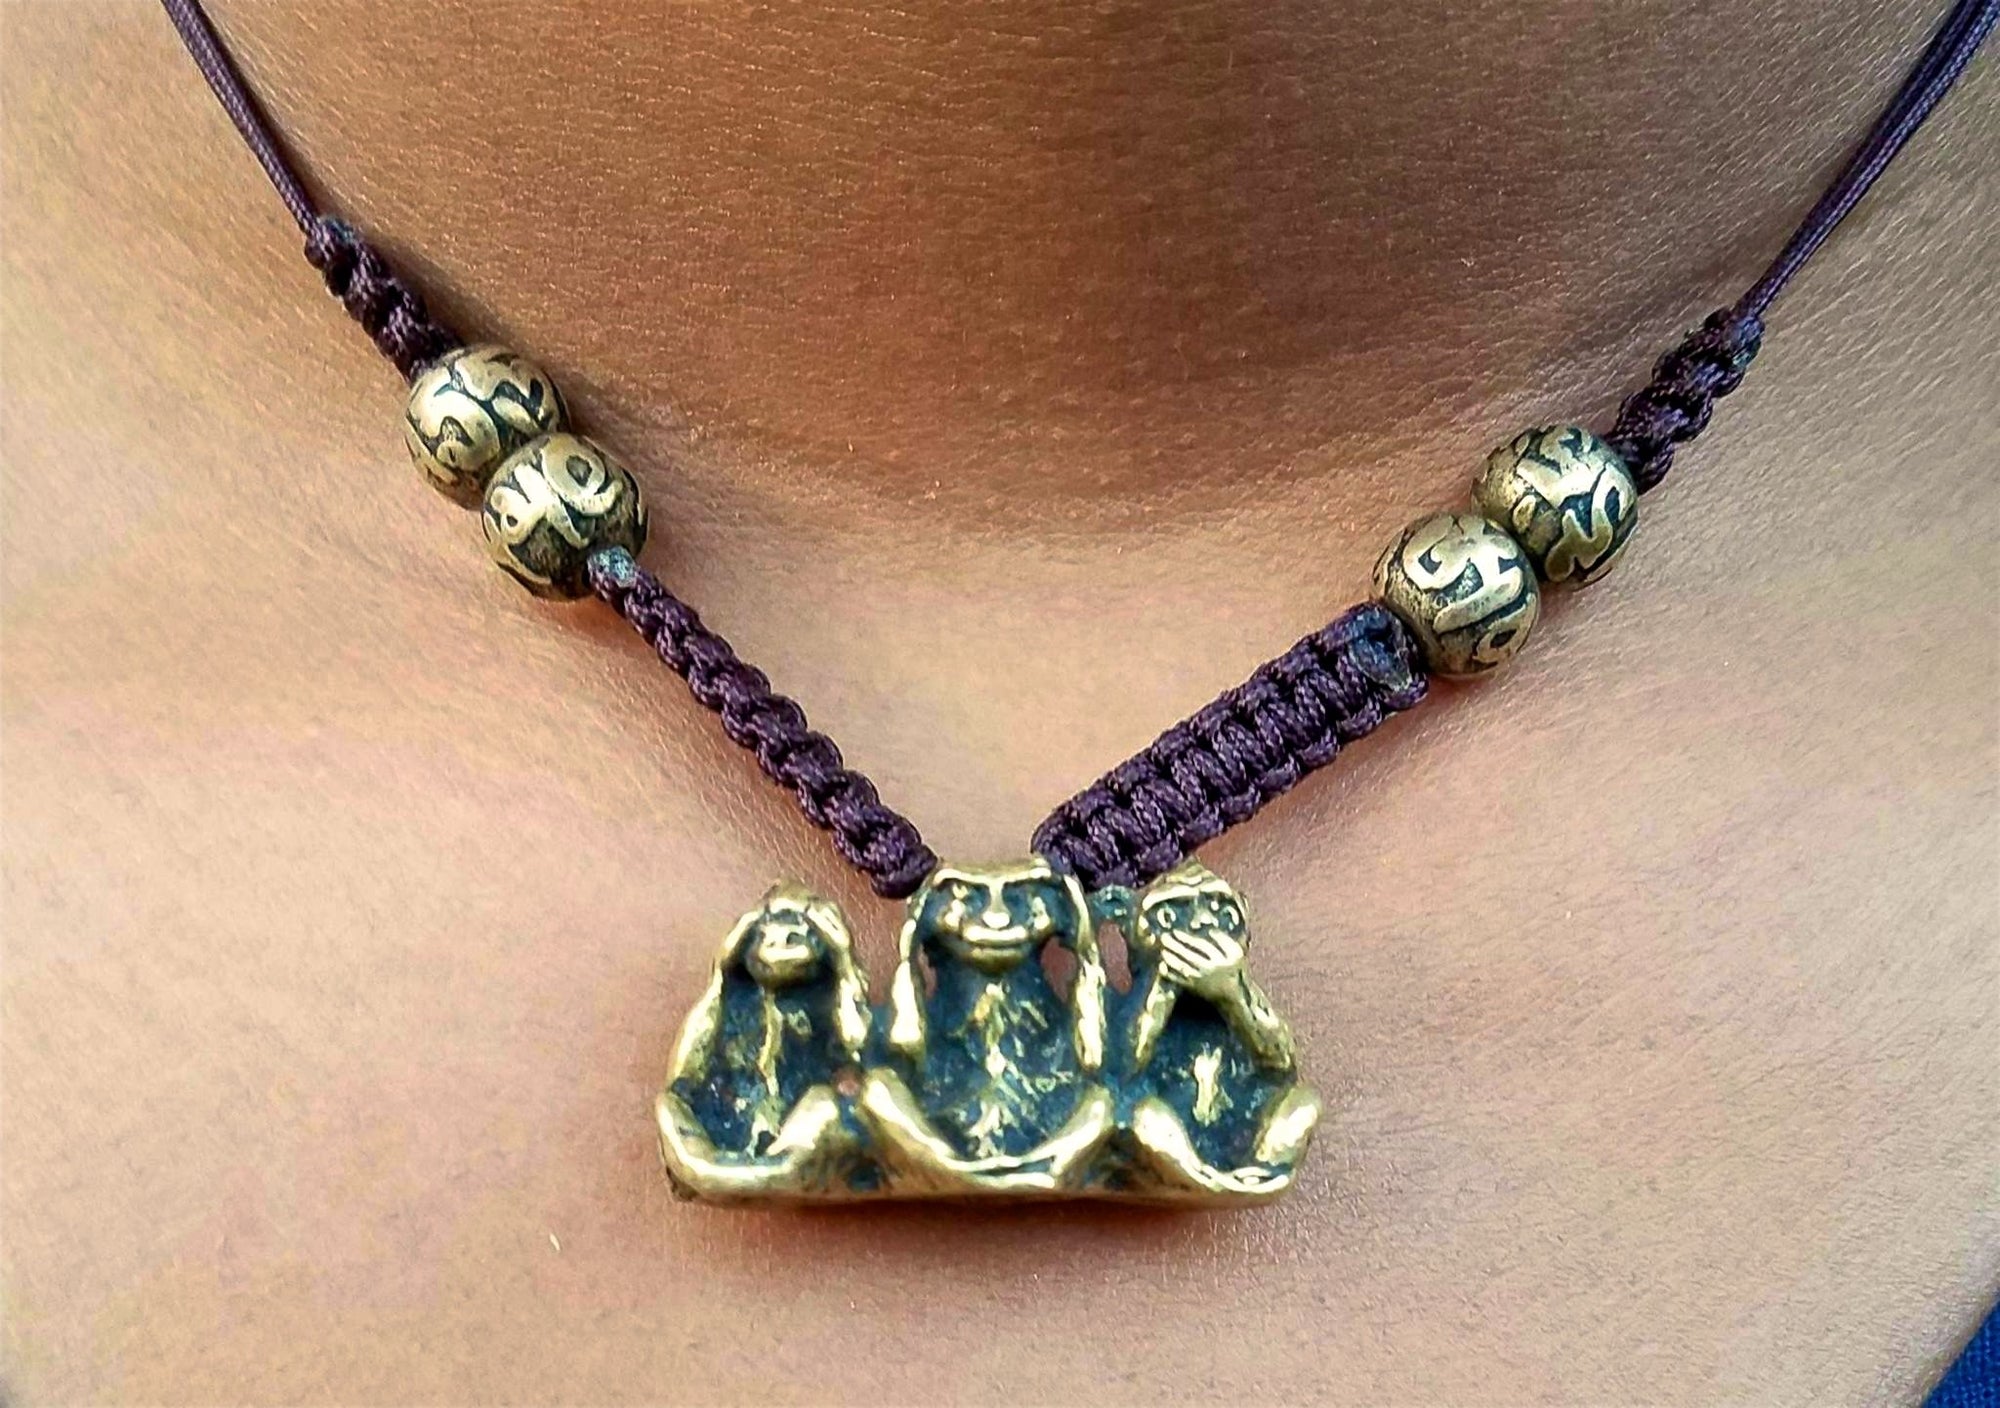 3 Wise Monkeys Necklace